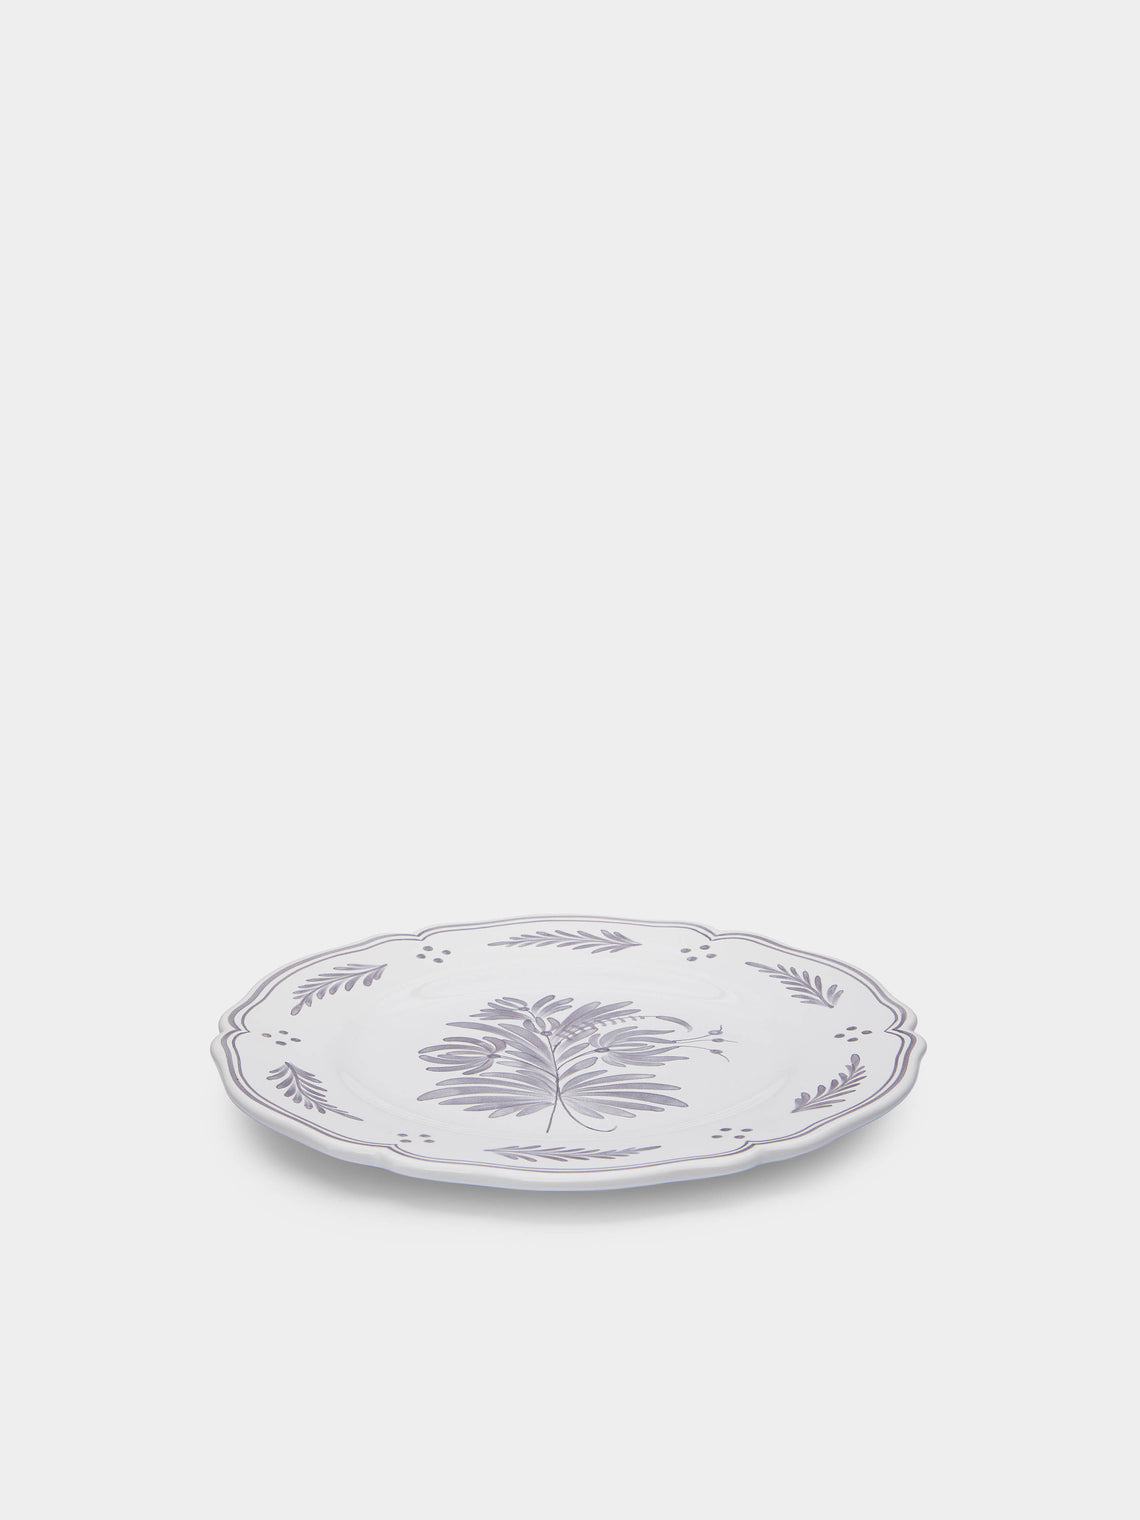 Bourg Joly Malicorne - Antique Fleurs Hand-Painted Ceramic Side Plates (Set of 4) -  - ABASK